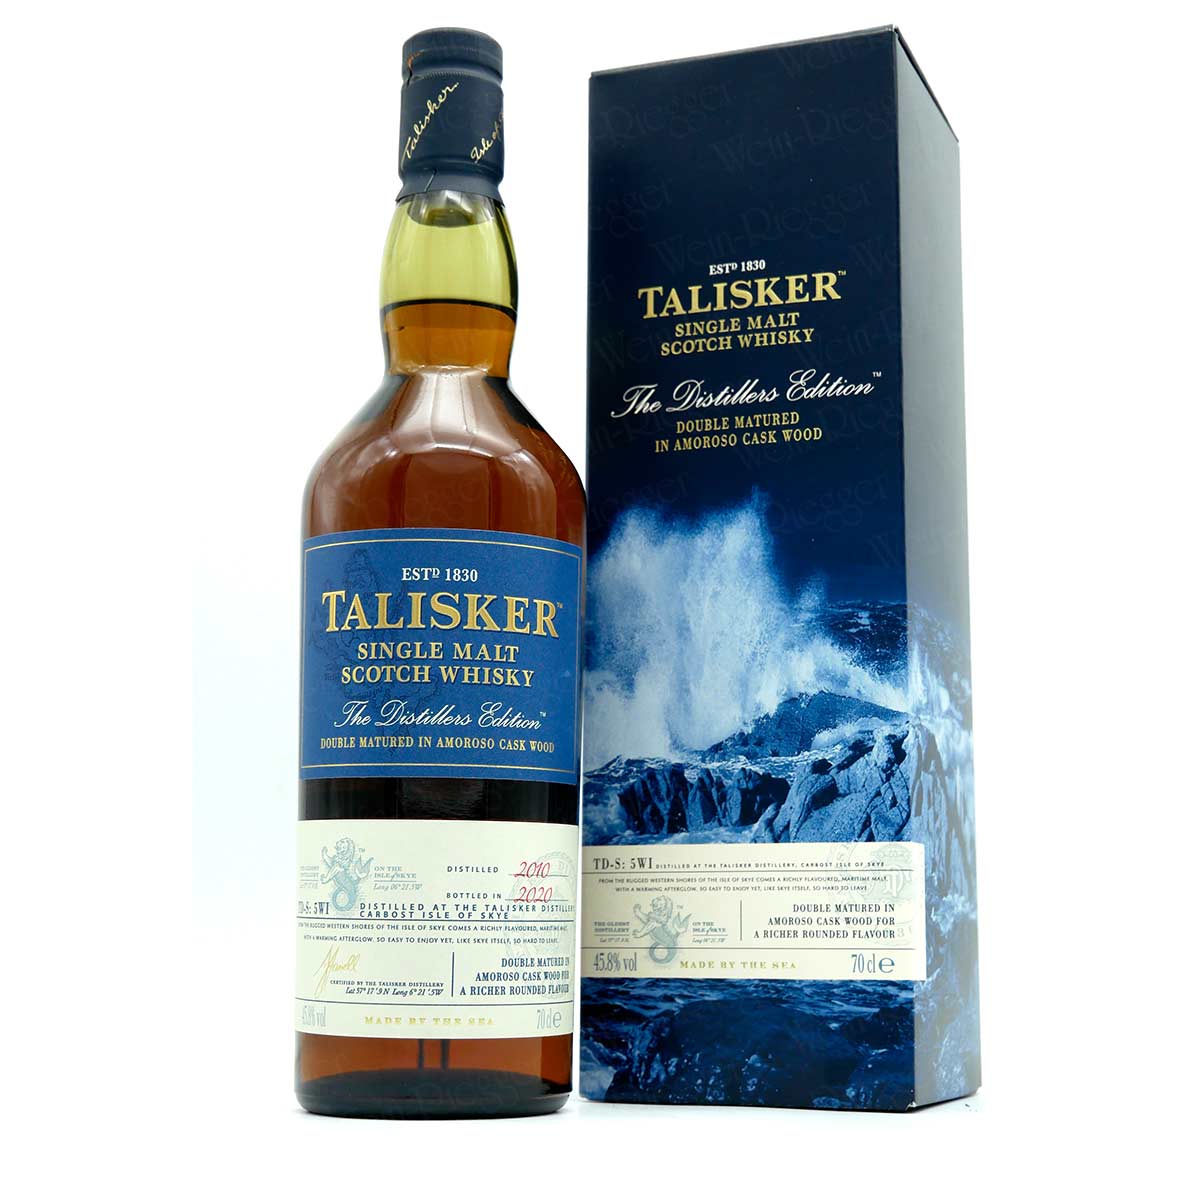 Talisker 2010 Distillers Edition 2010/2020 - TD-S: 5WI | Amoroso Cask Wood